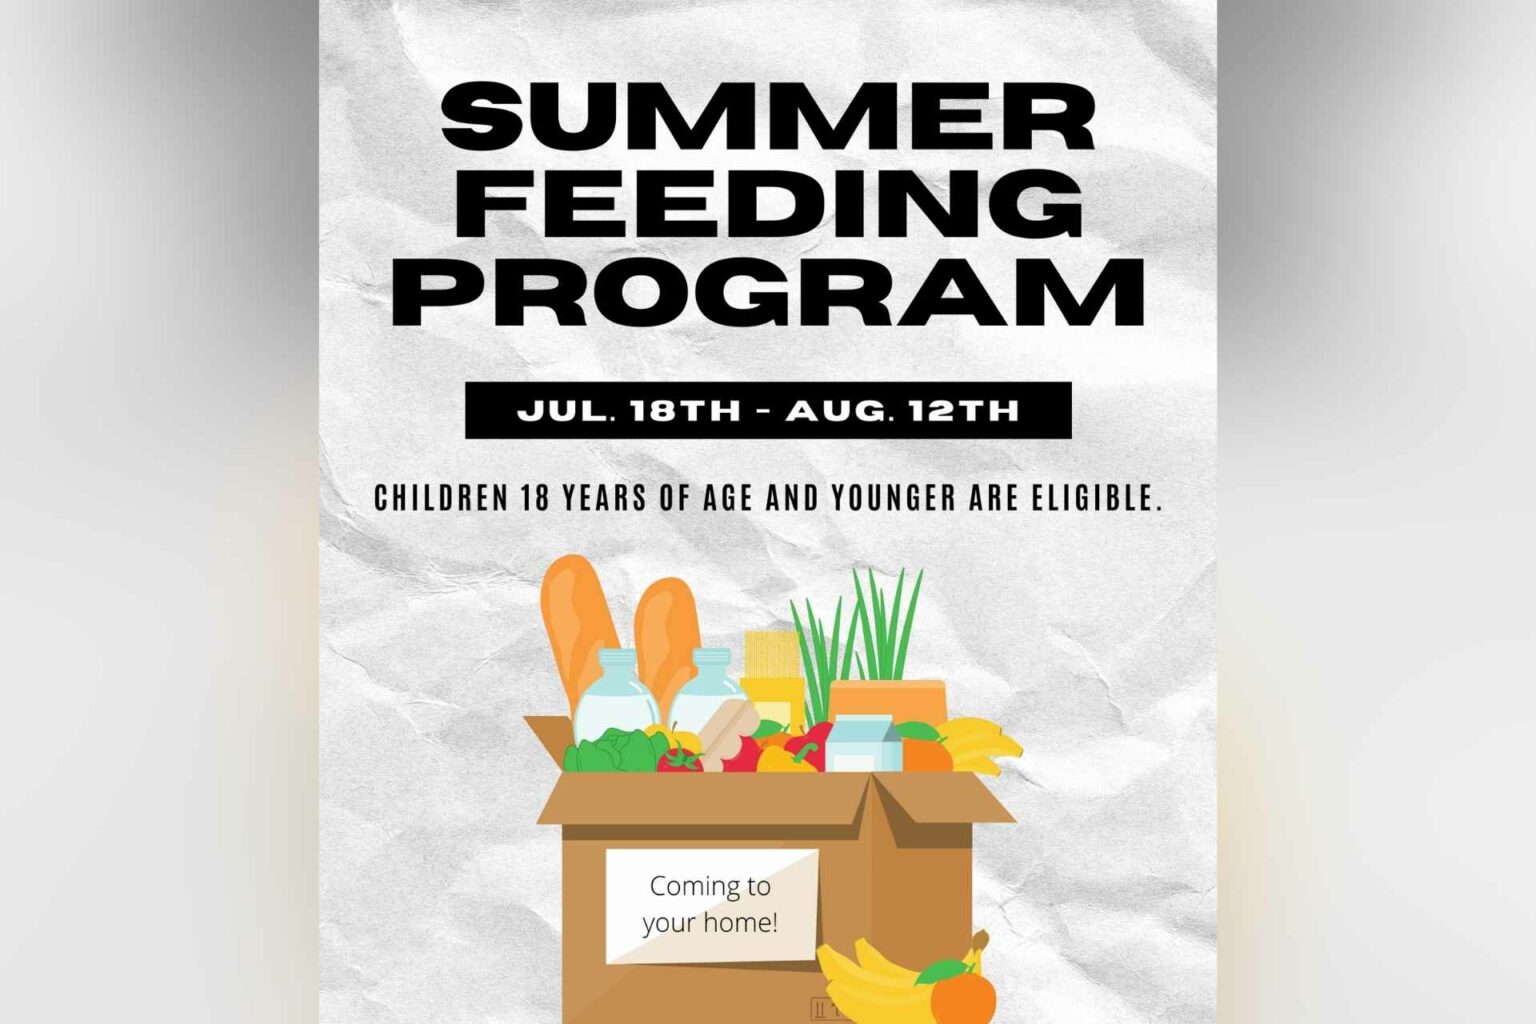 Upshur County Schools announces summer food service program opportunity